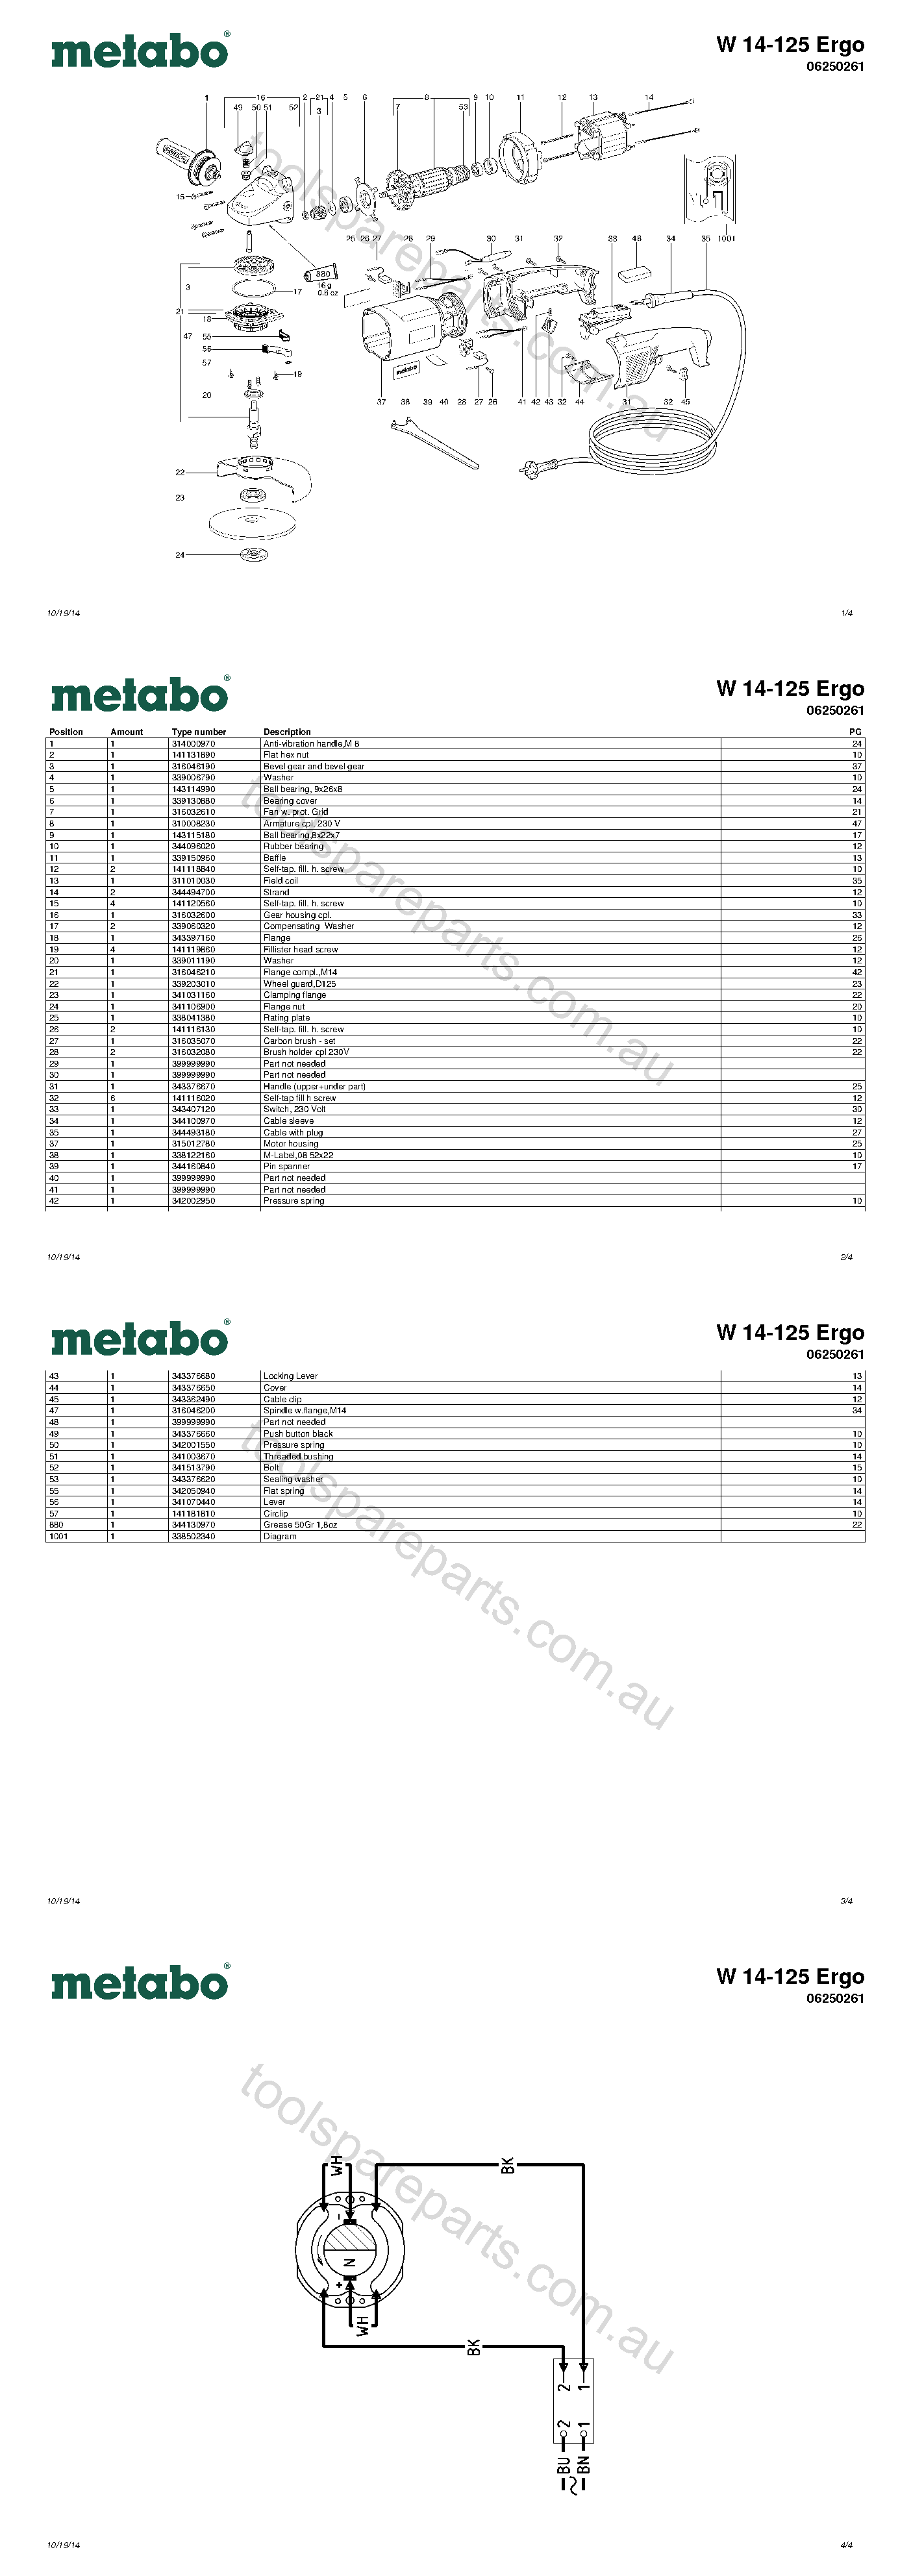 Metabo W 14-125 Ergo 06250261  Diagram 1